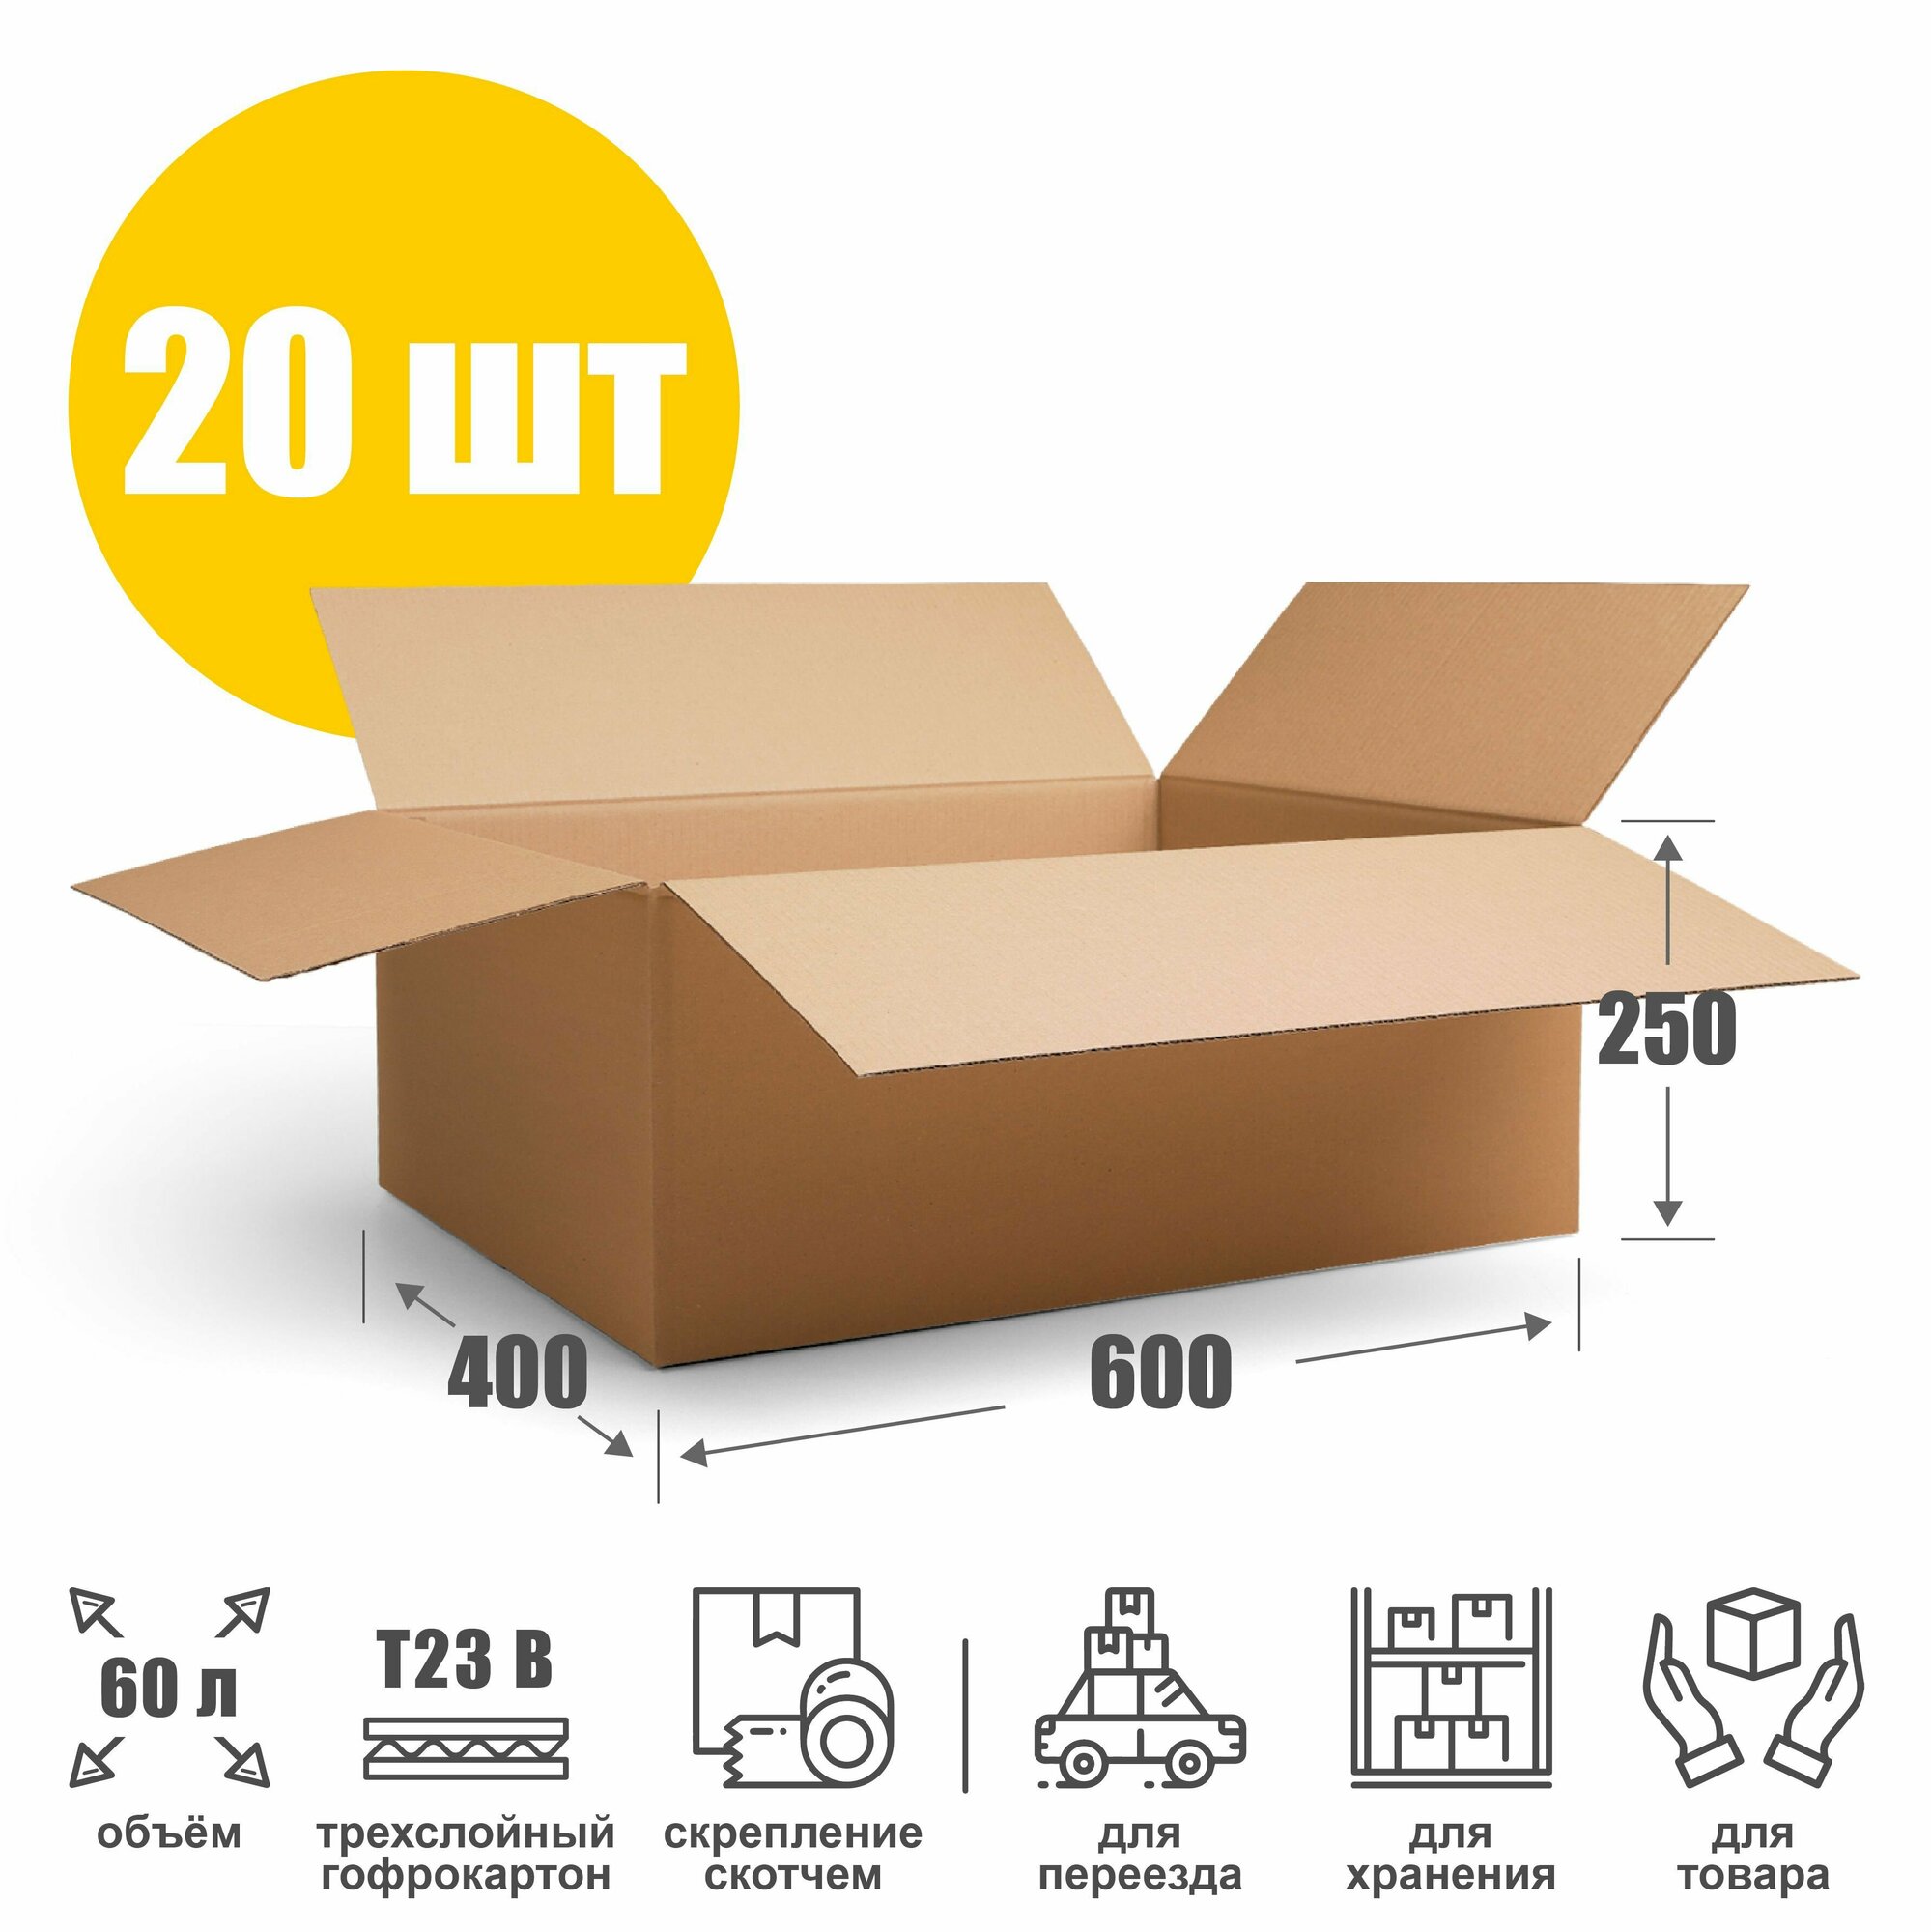 Картонная коробка для переезда и хранения 60х40х25 см (Т23 В). Упаковка для маркетплейсов 600х400х250 мм. Гофрокороб объем 60 л.